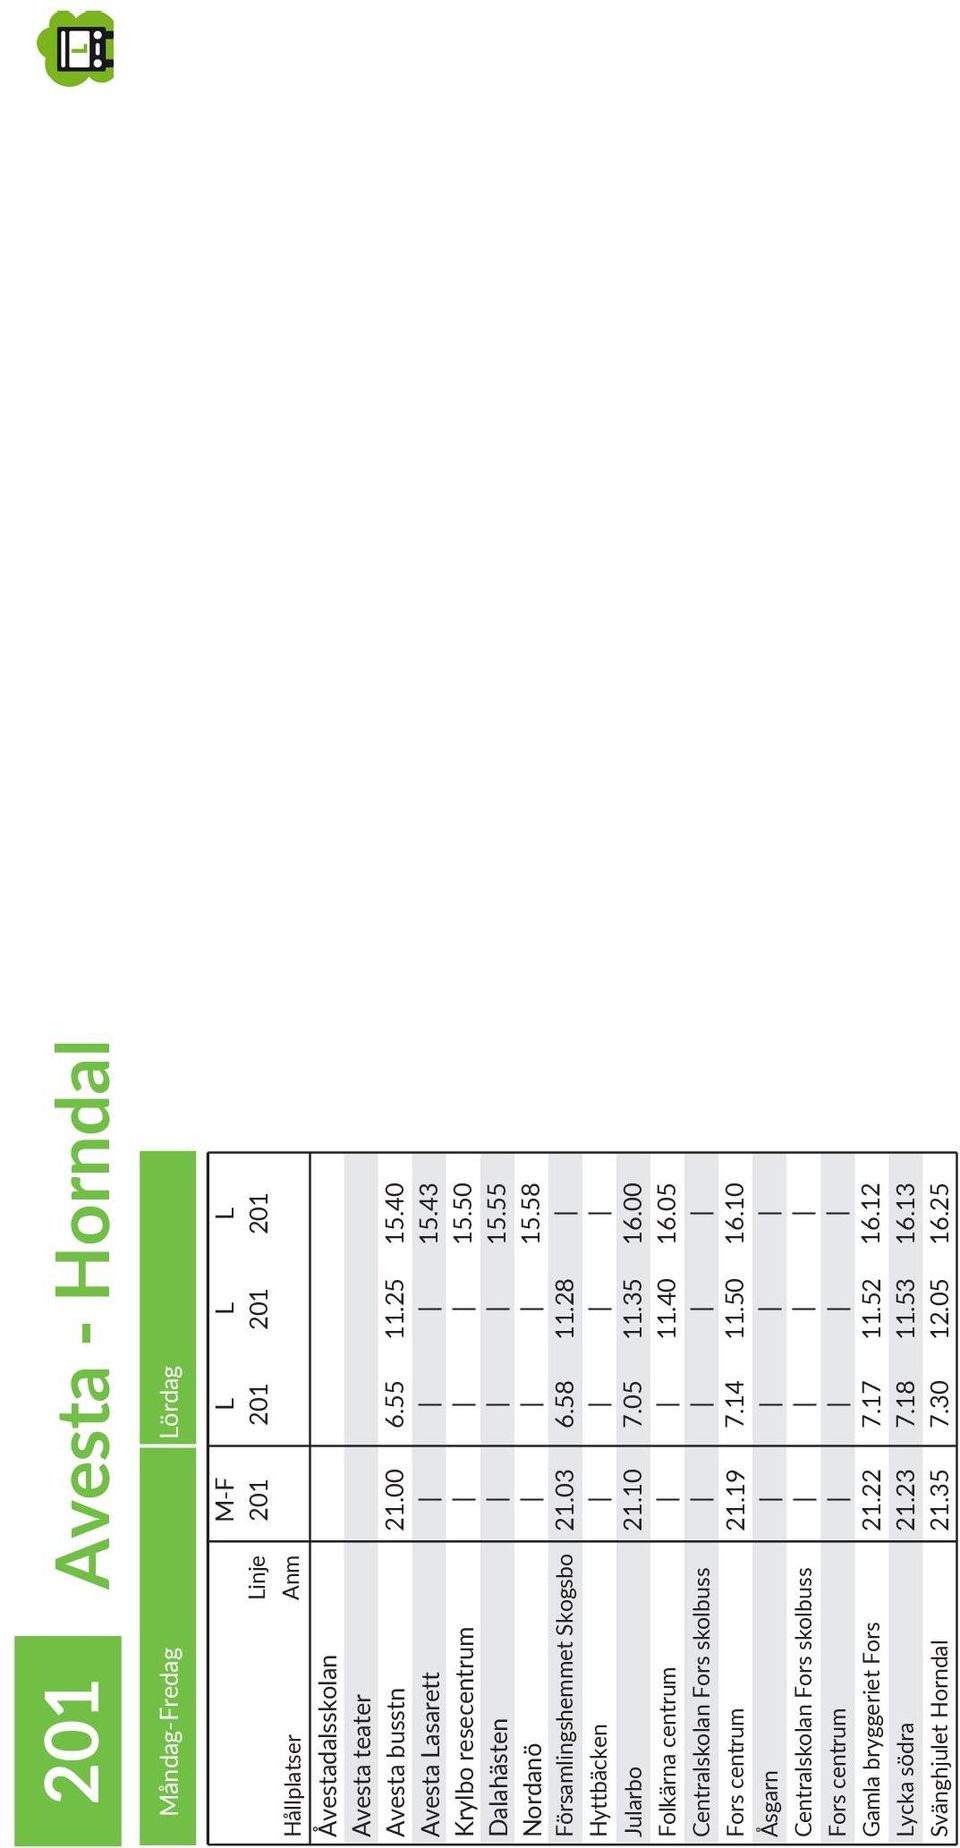 Fors Lycka södra Svänghjulet Horndal M-F L L L Linje 201 201 201 201 Anm 21.00 21.03 21.10 21.19 21.22 21.23 21.35 6.55 6.58 7.